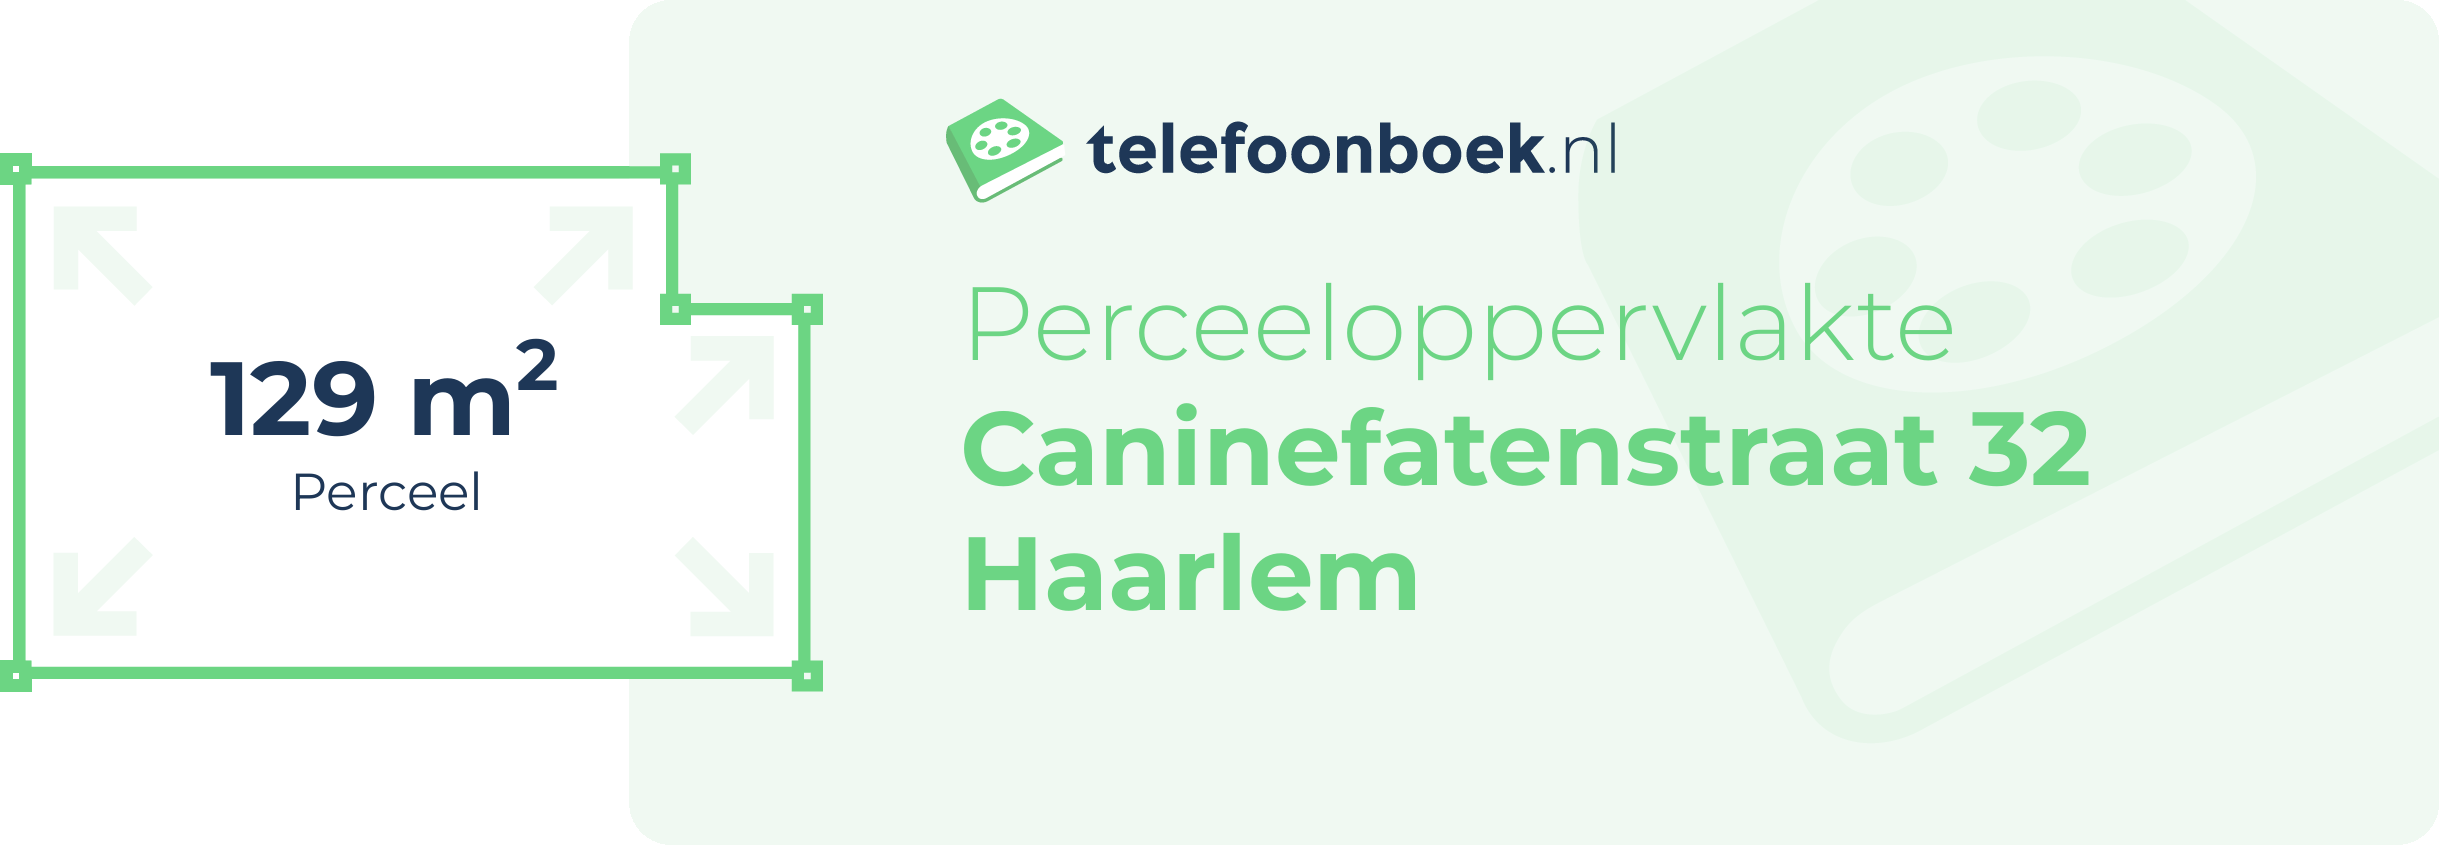 Perceeloppervlakte Caninefatenstraat 32 Haarlem